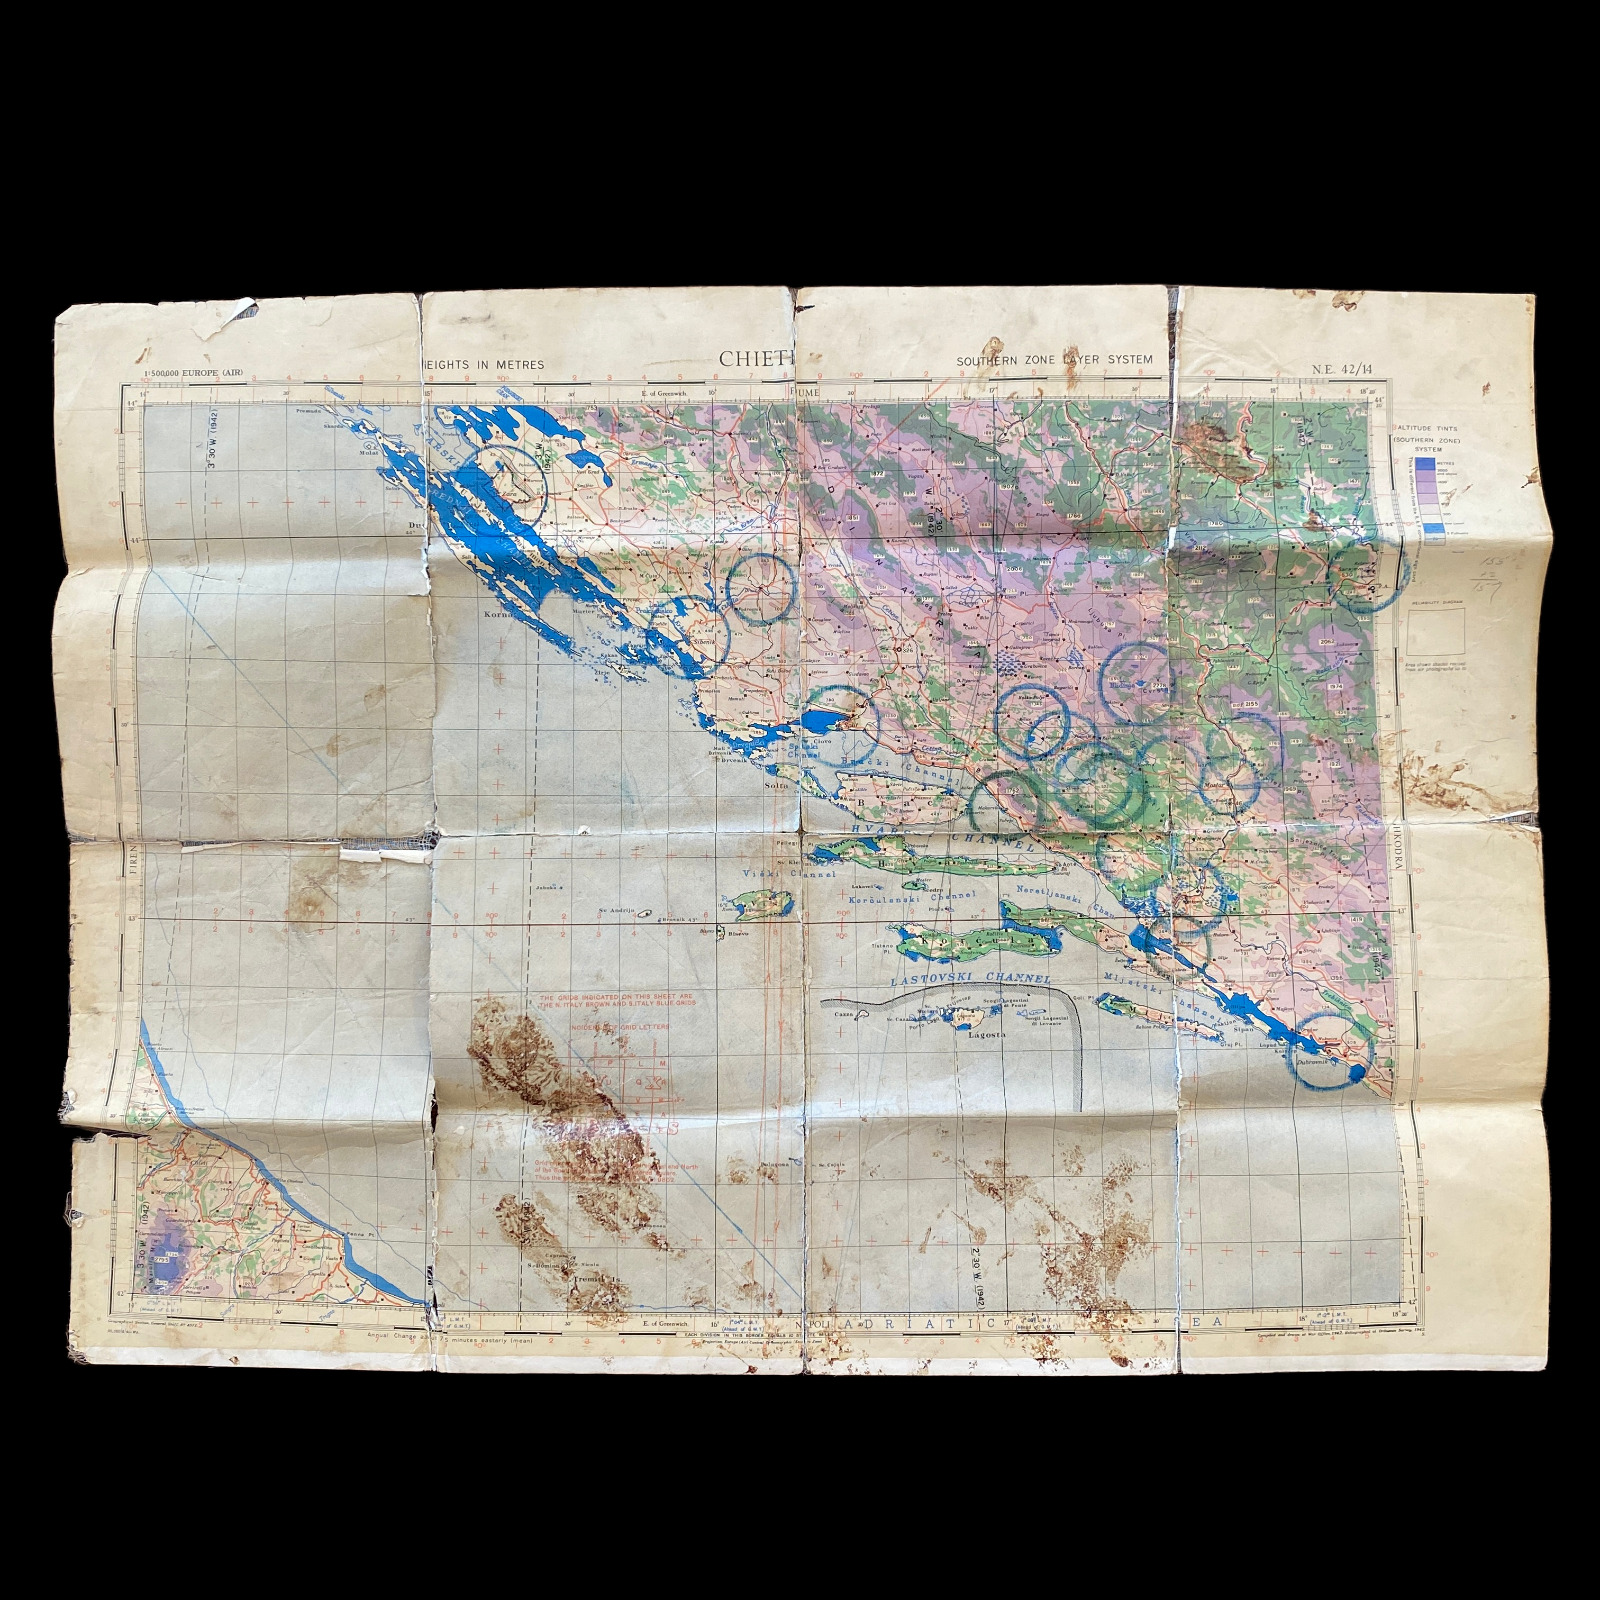 VERY RARE WWII FLAK Map LIVORNO Italy Mission 1943 USAAF Navigator Raid Mission